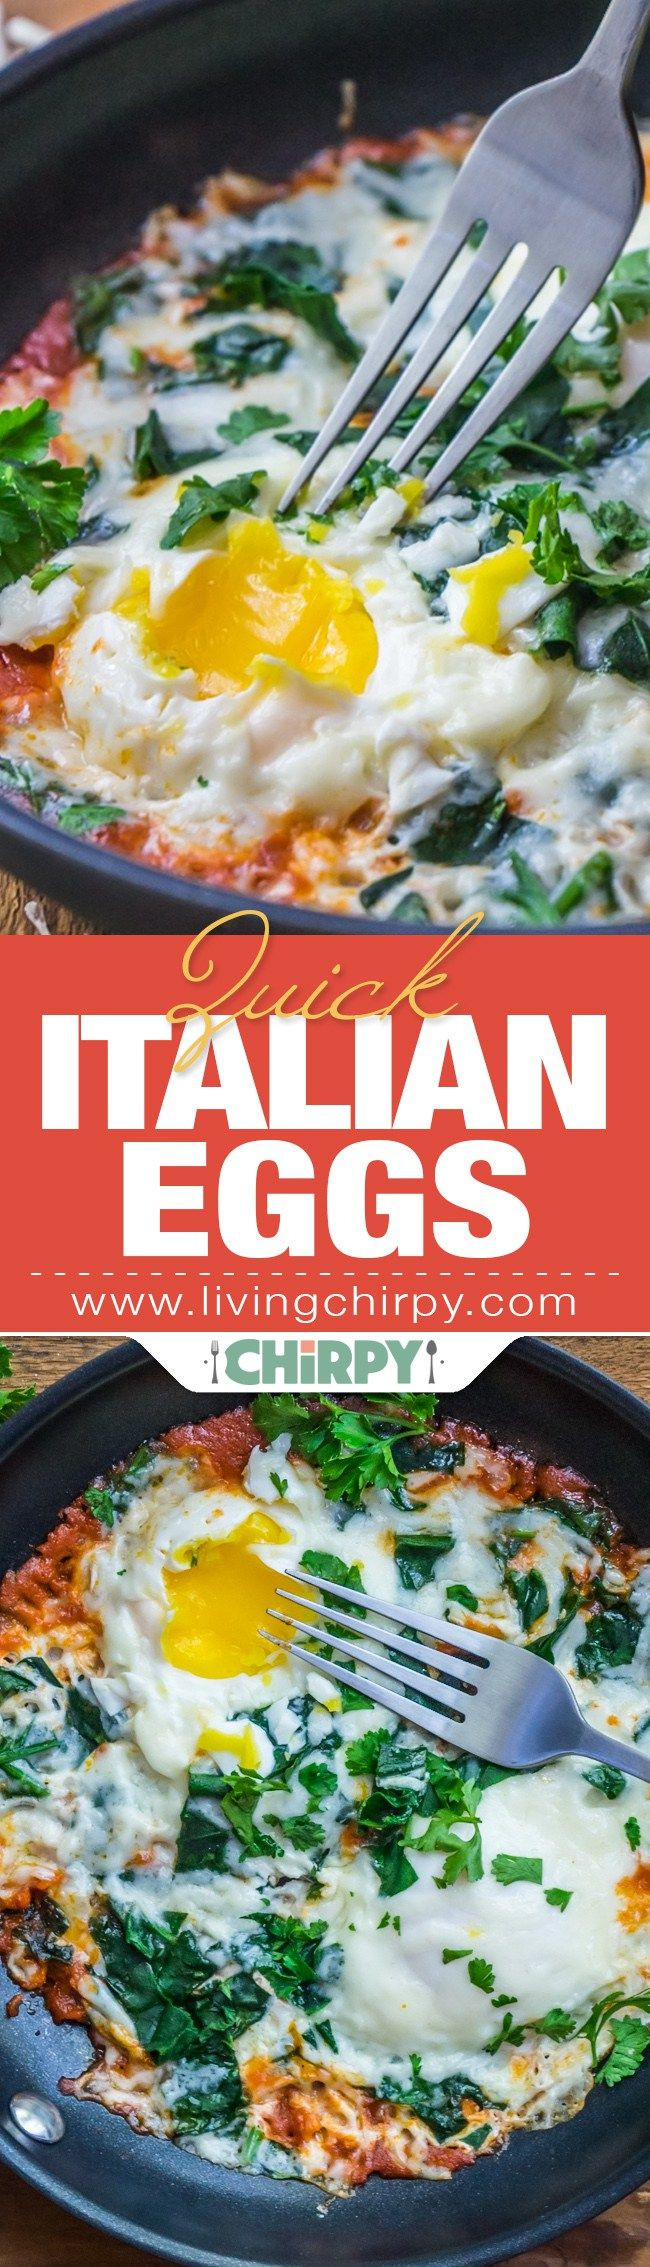 Italian Brunch Recipes
 Quick Italian Eggs Recipe